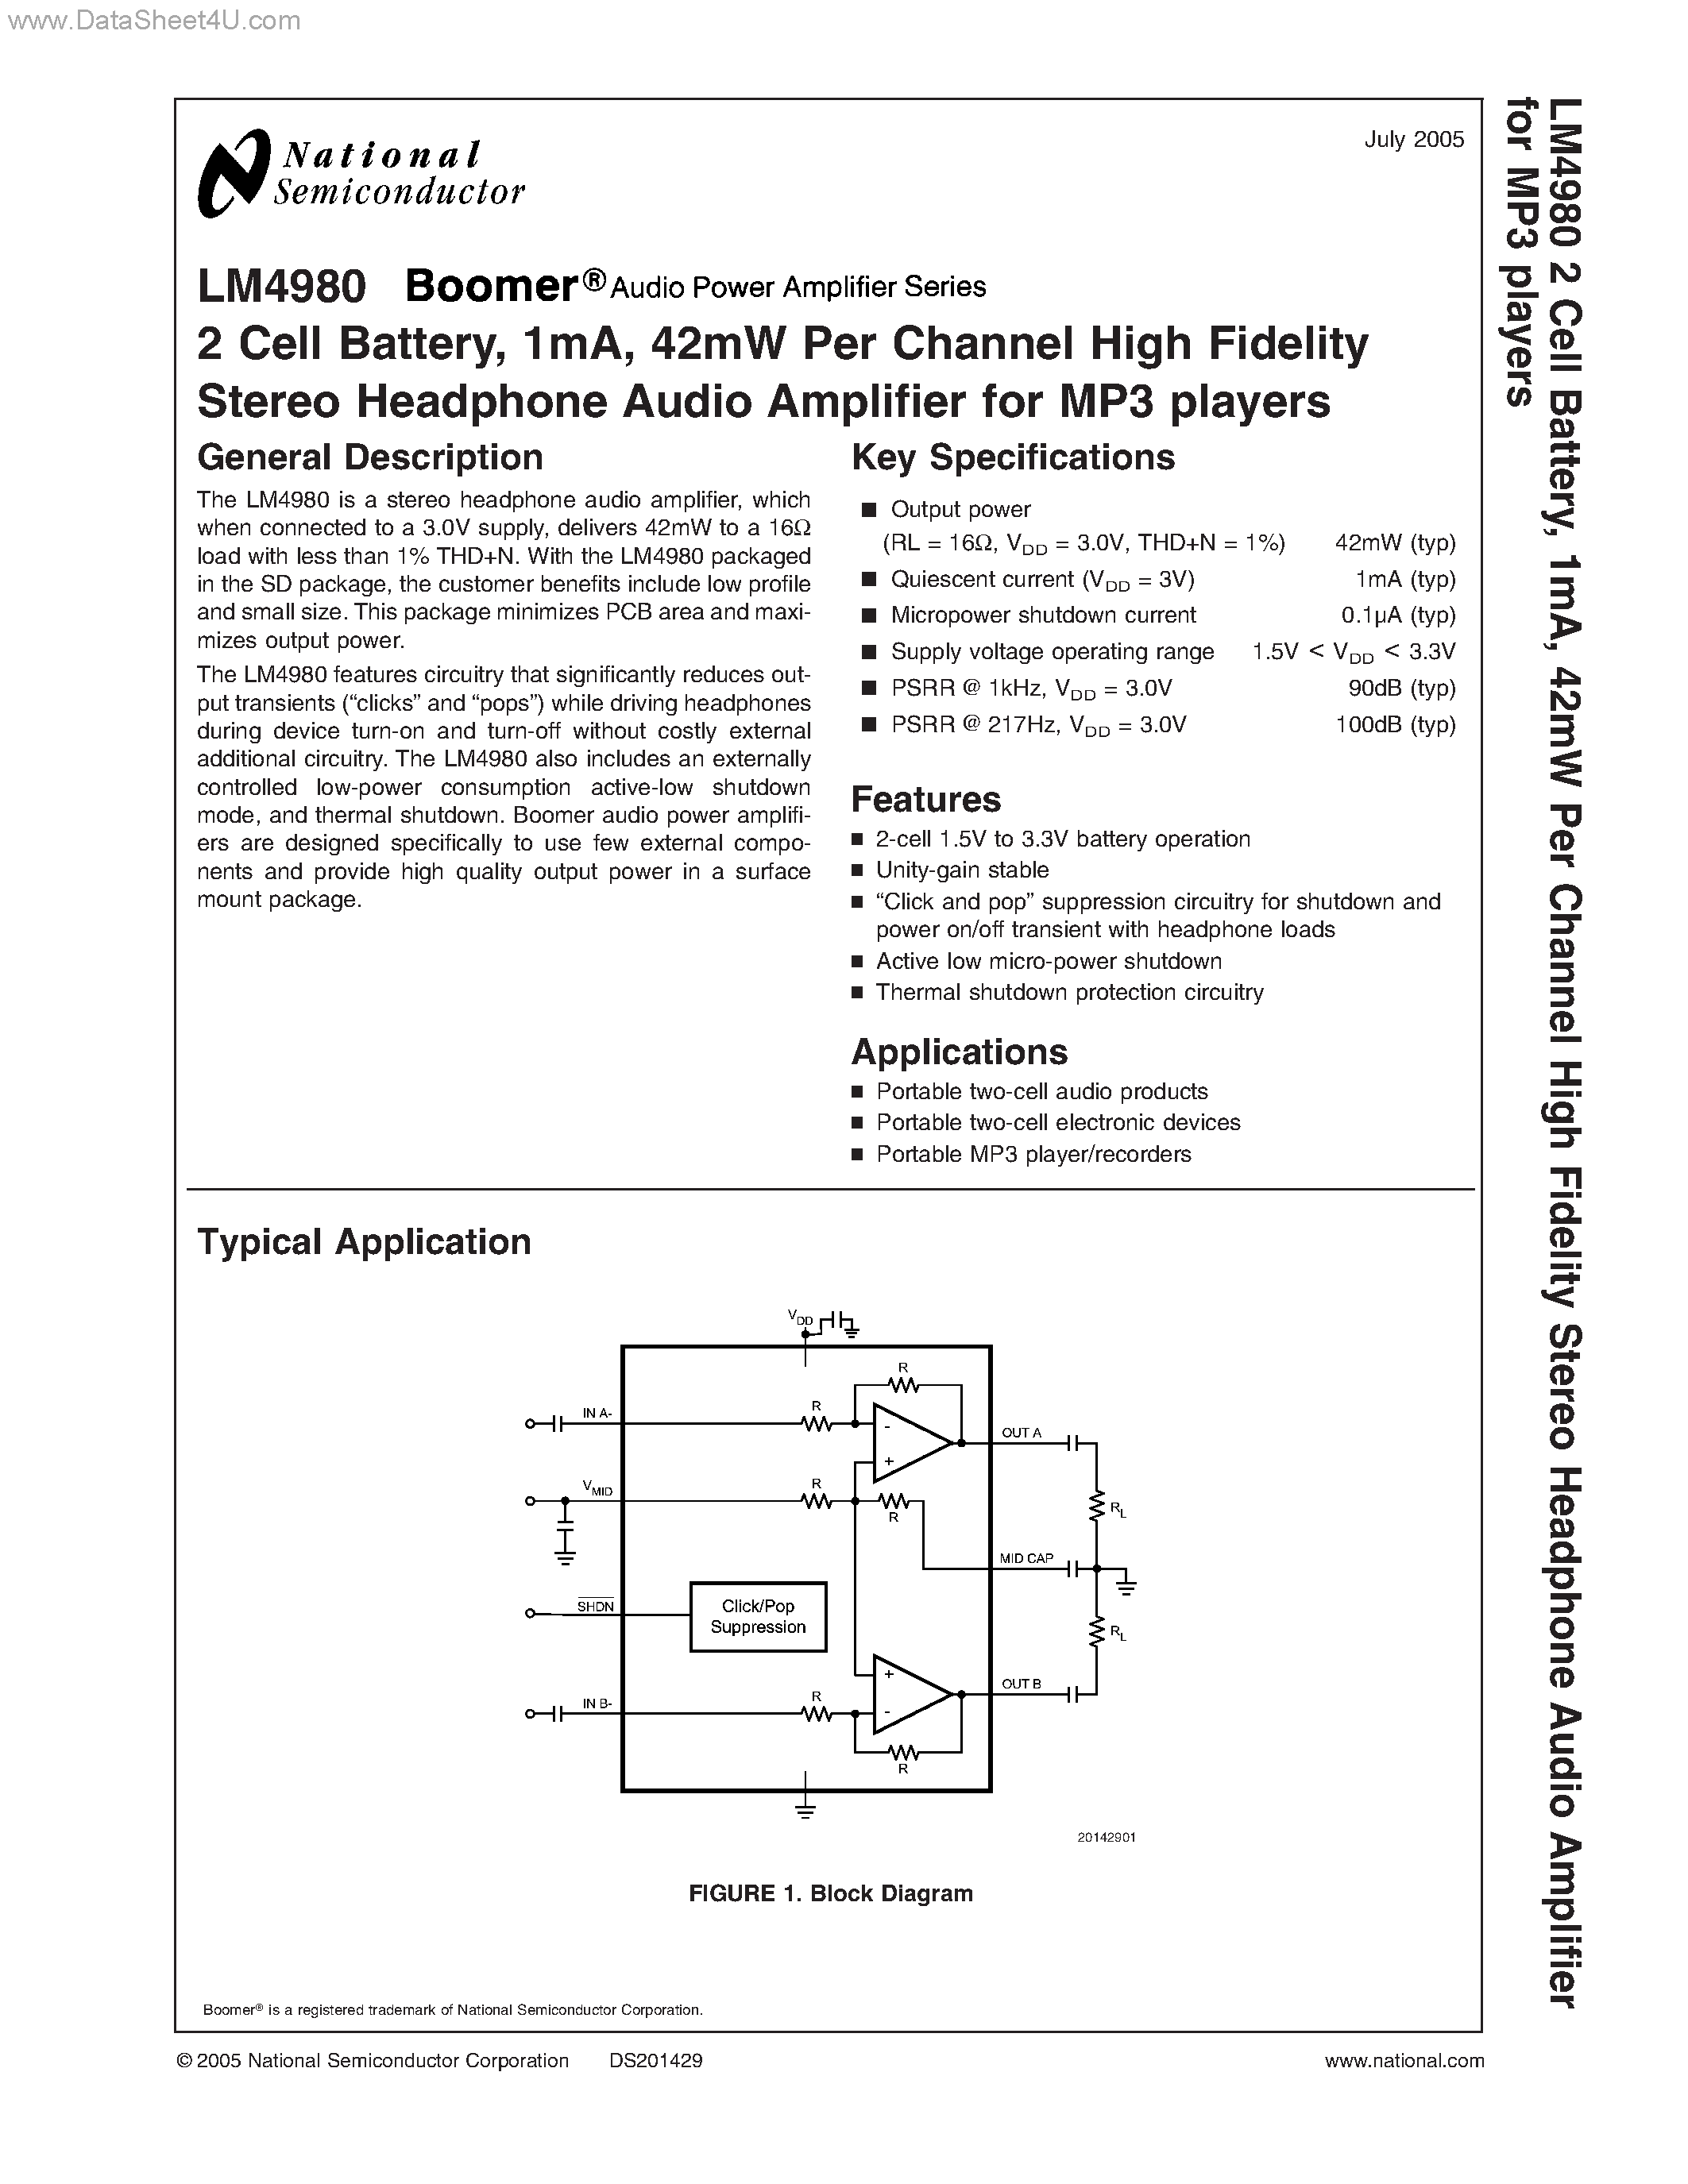 Даташит LM4980 - High Fidelity Stereo Headphone Audio Amplifier страница 1